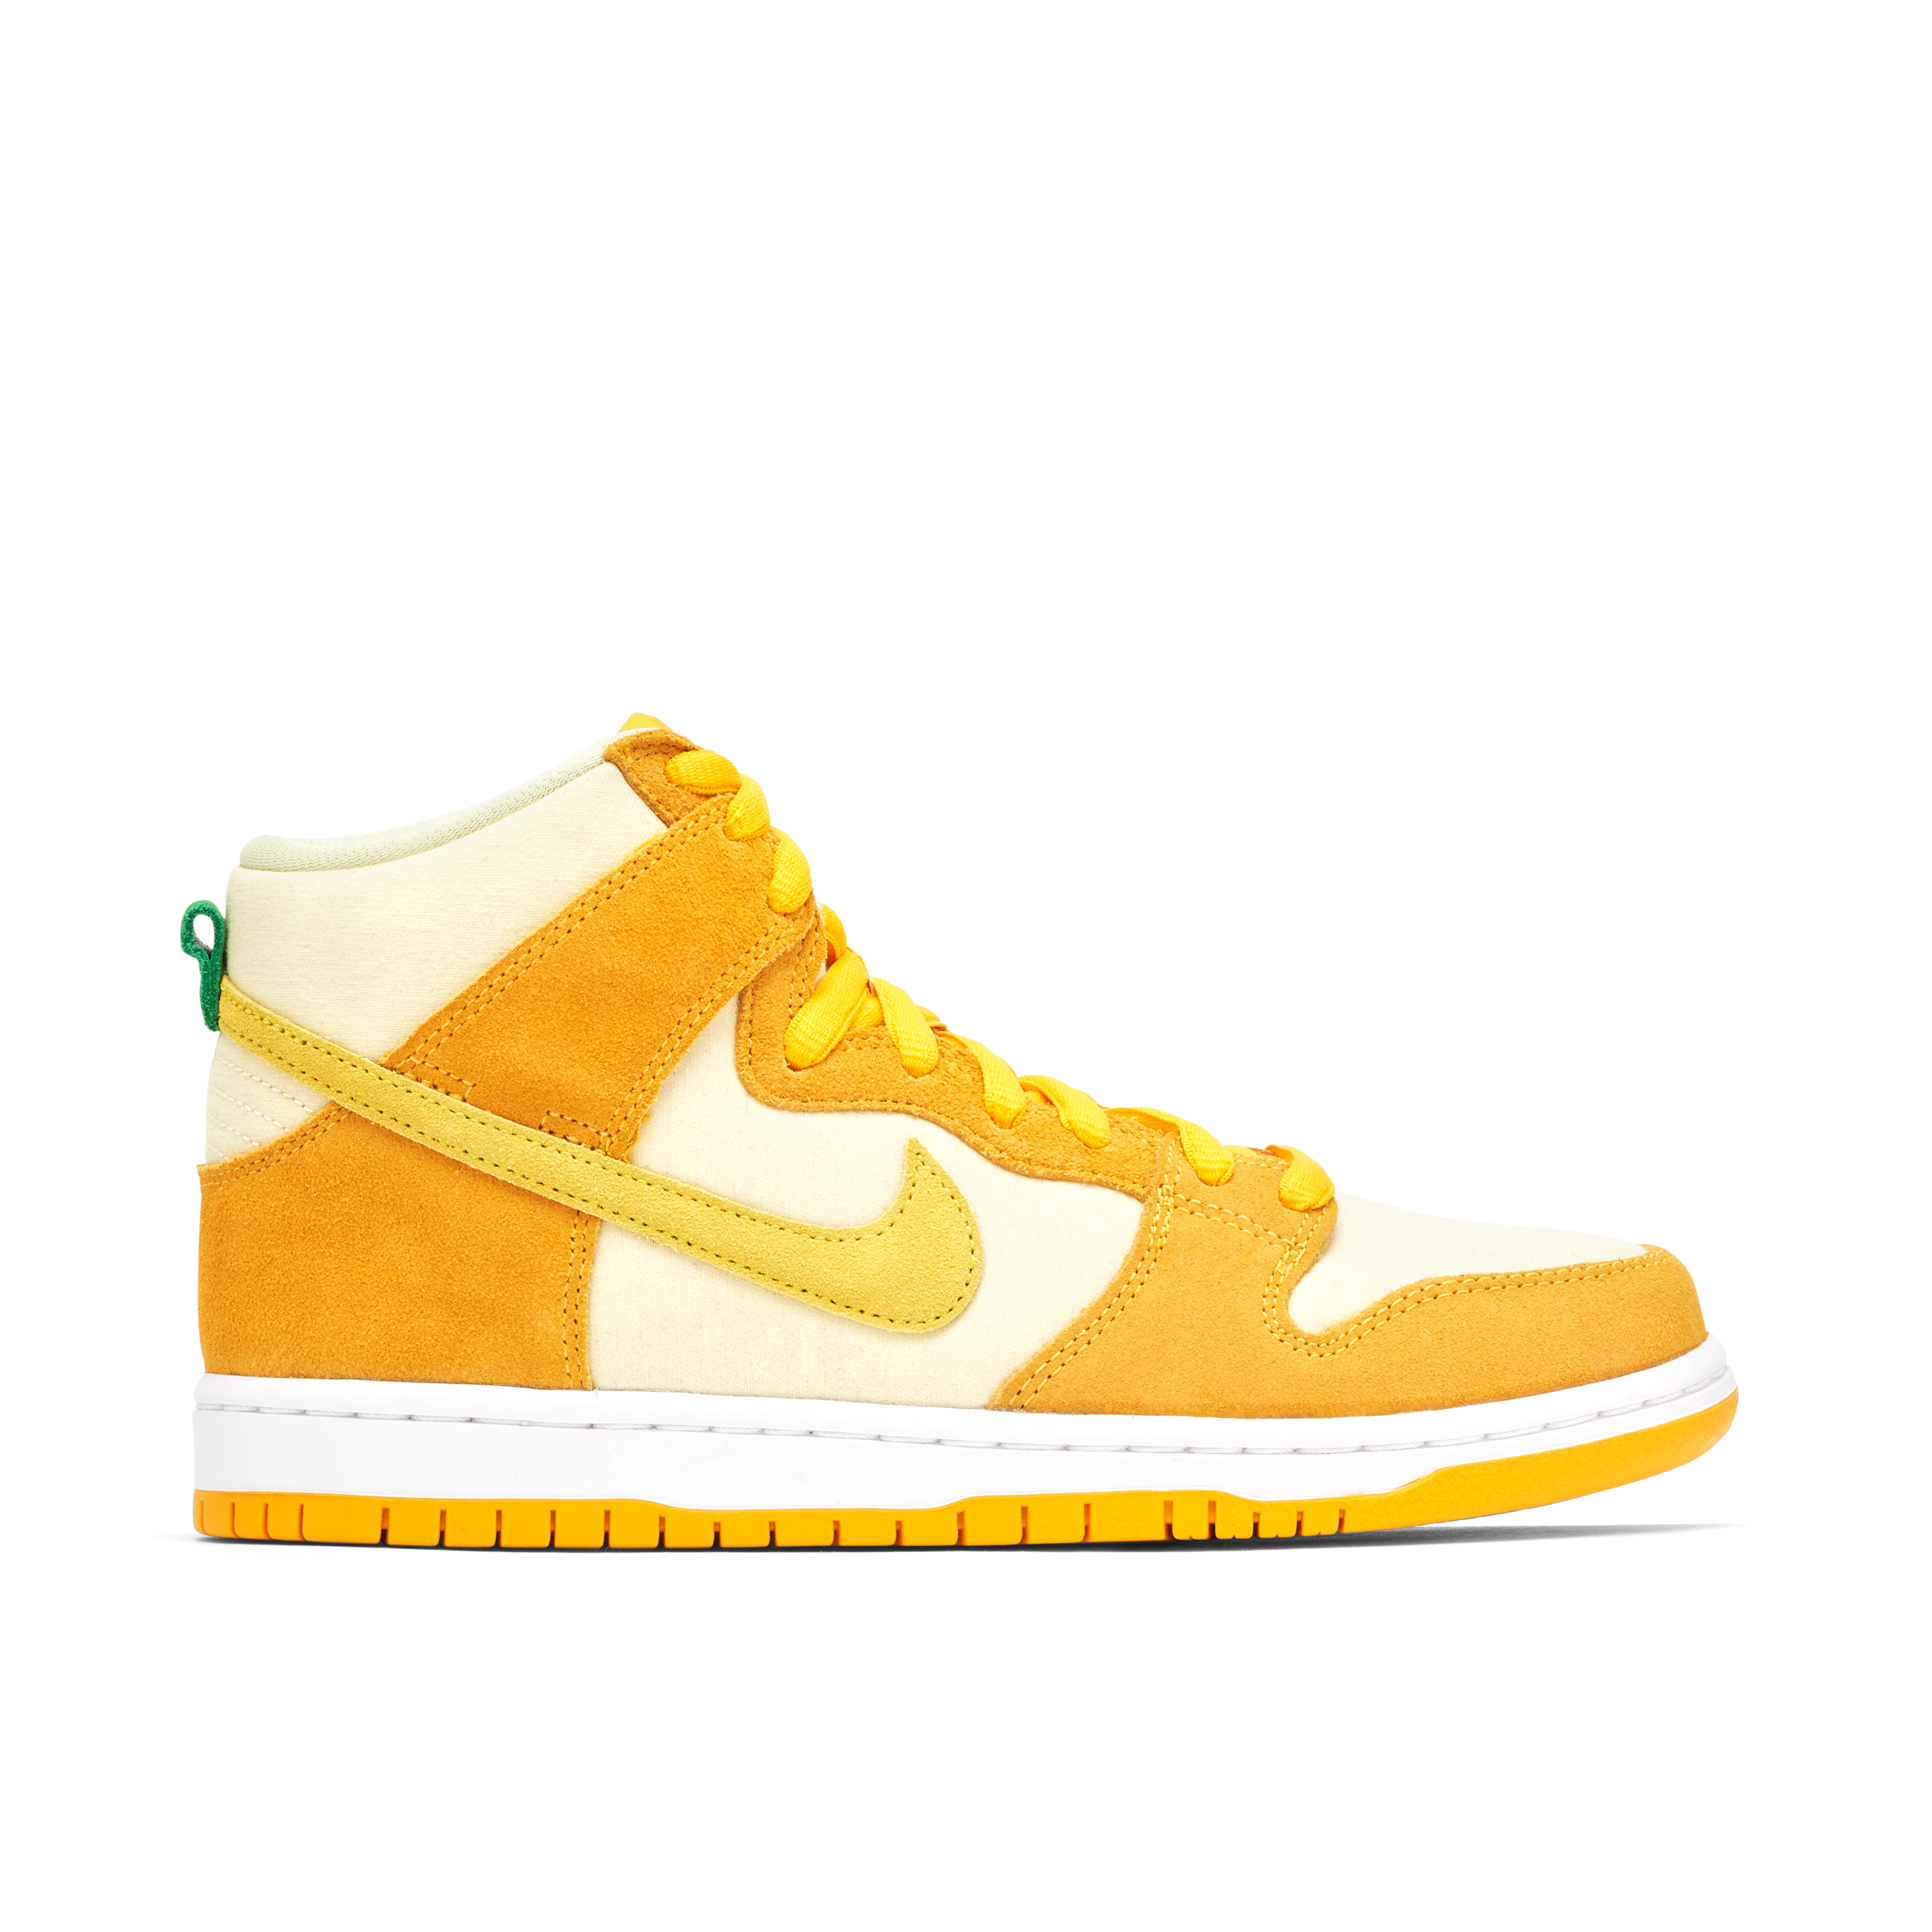 Nike SB Dunk High "Pineapple